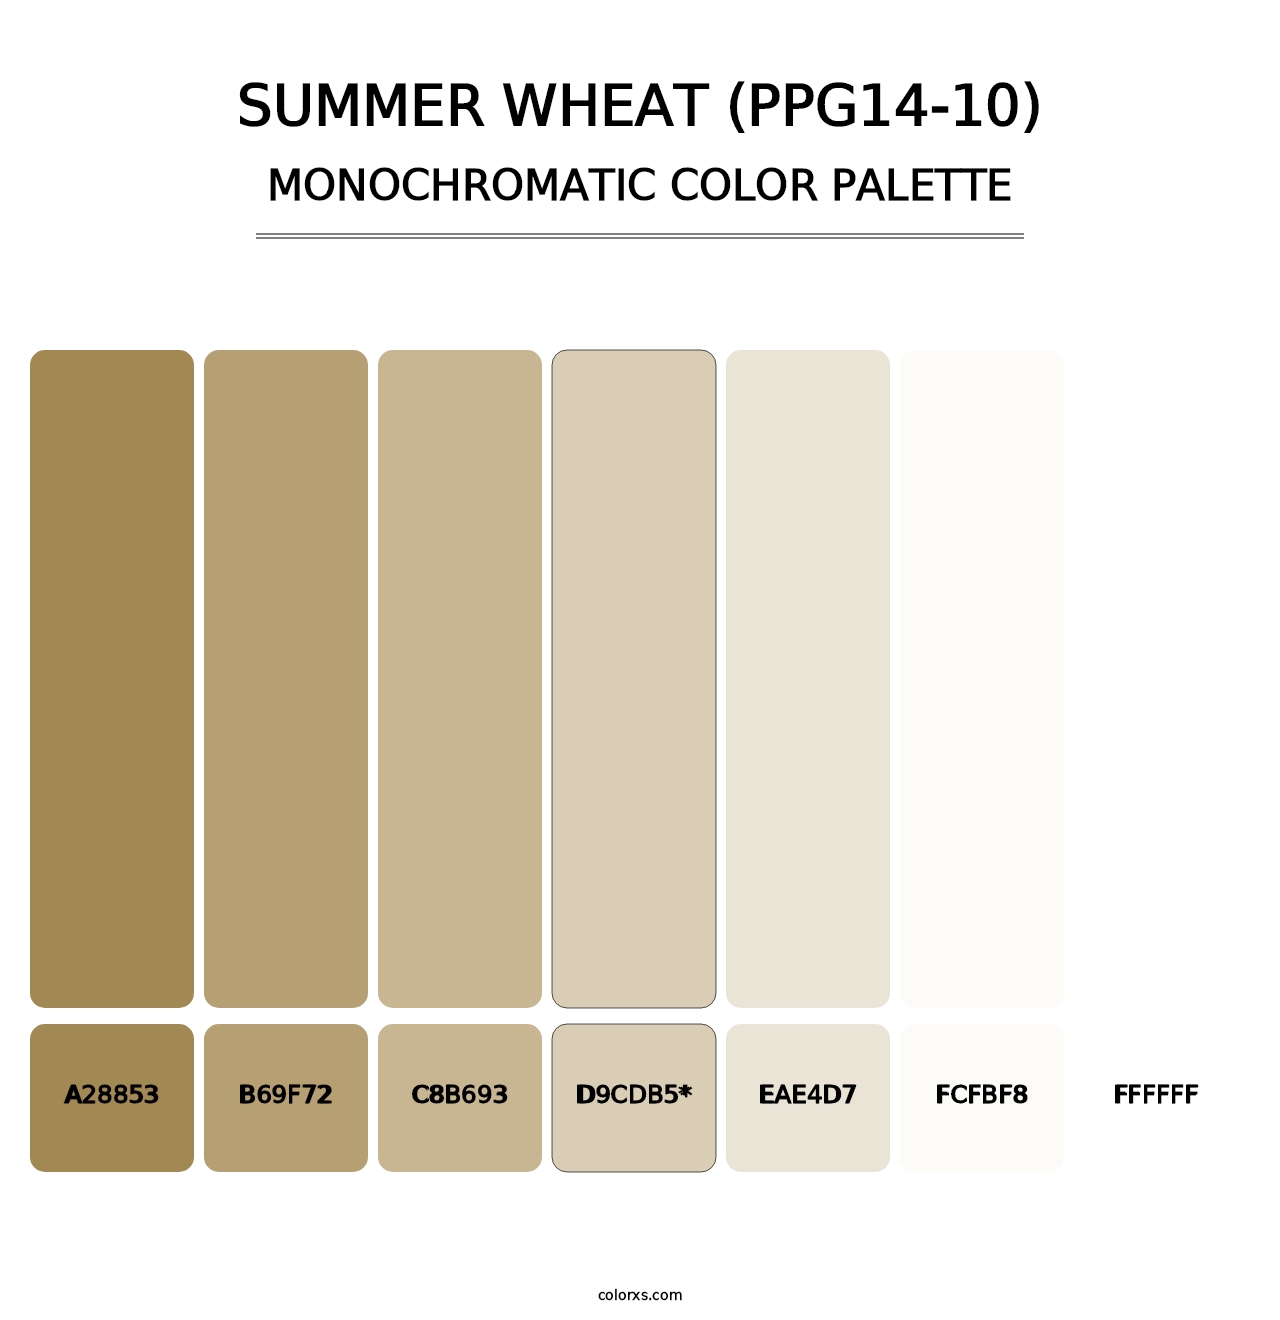 Summer Wheat (PPG14-10) - Monochromatic Color Palette